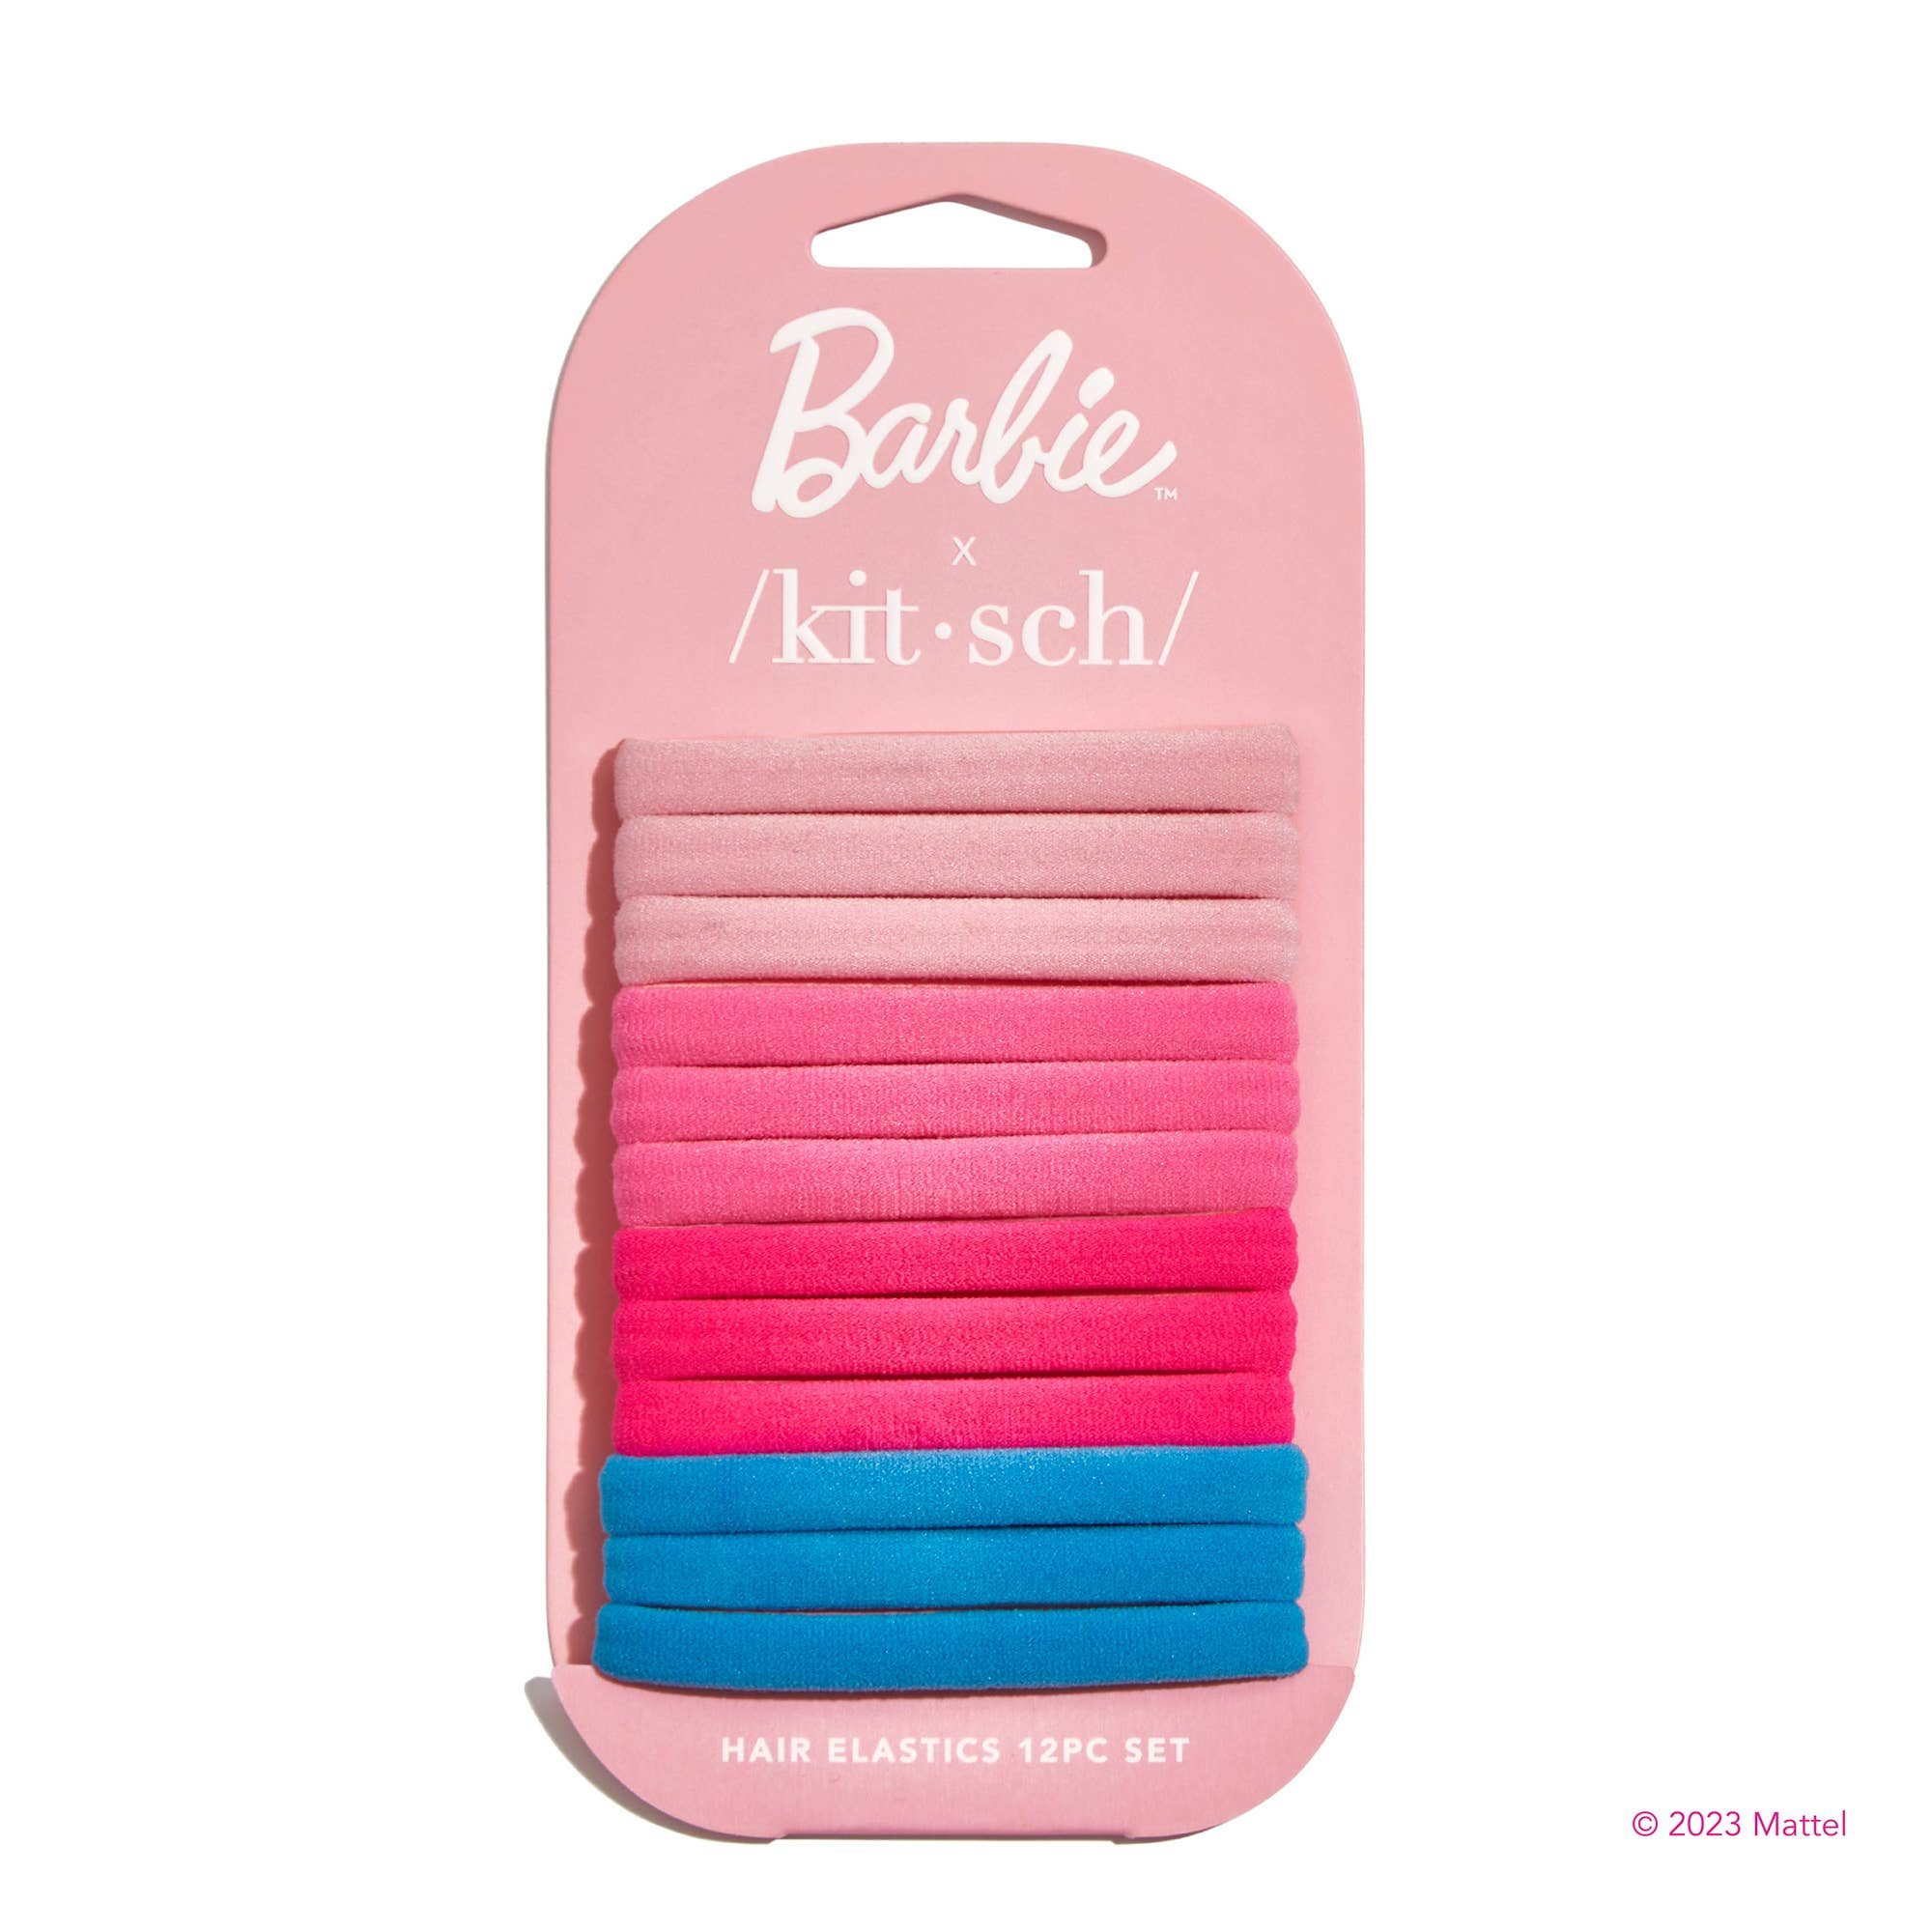 *Barbie x Kitsch Recycled Nylon Elastics